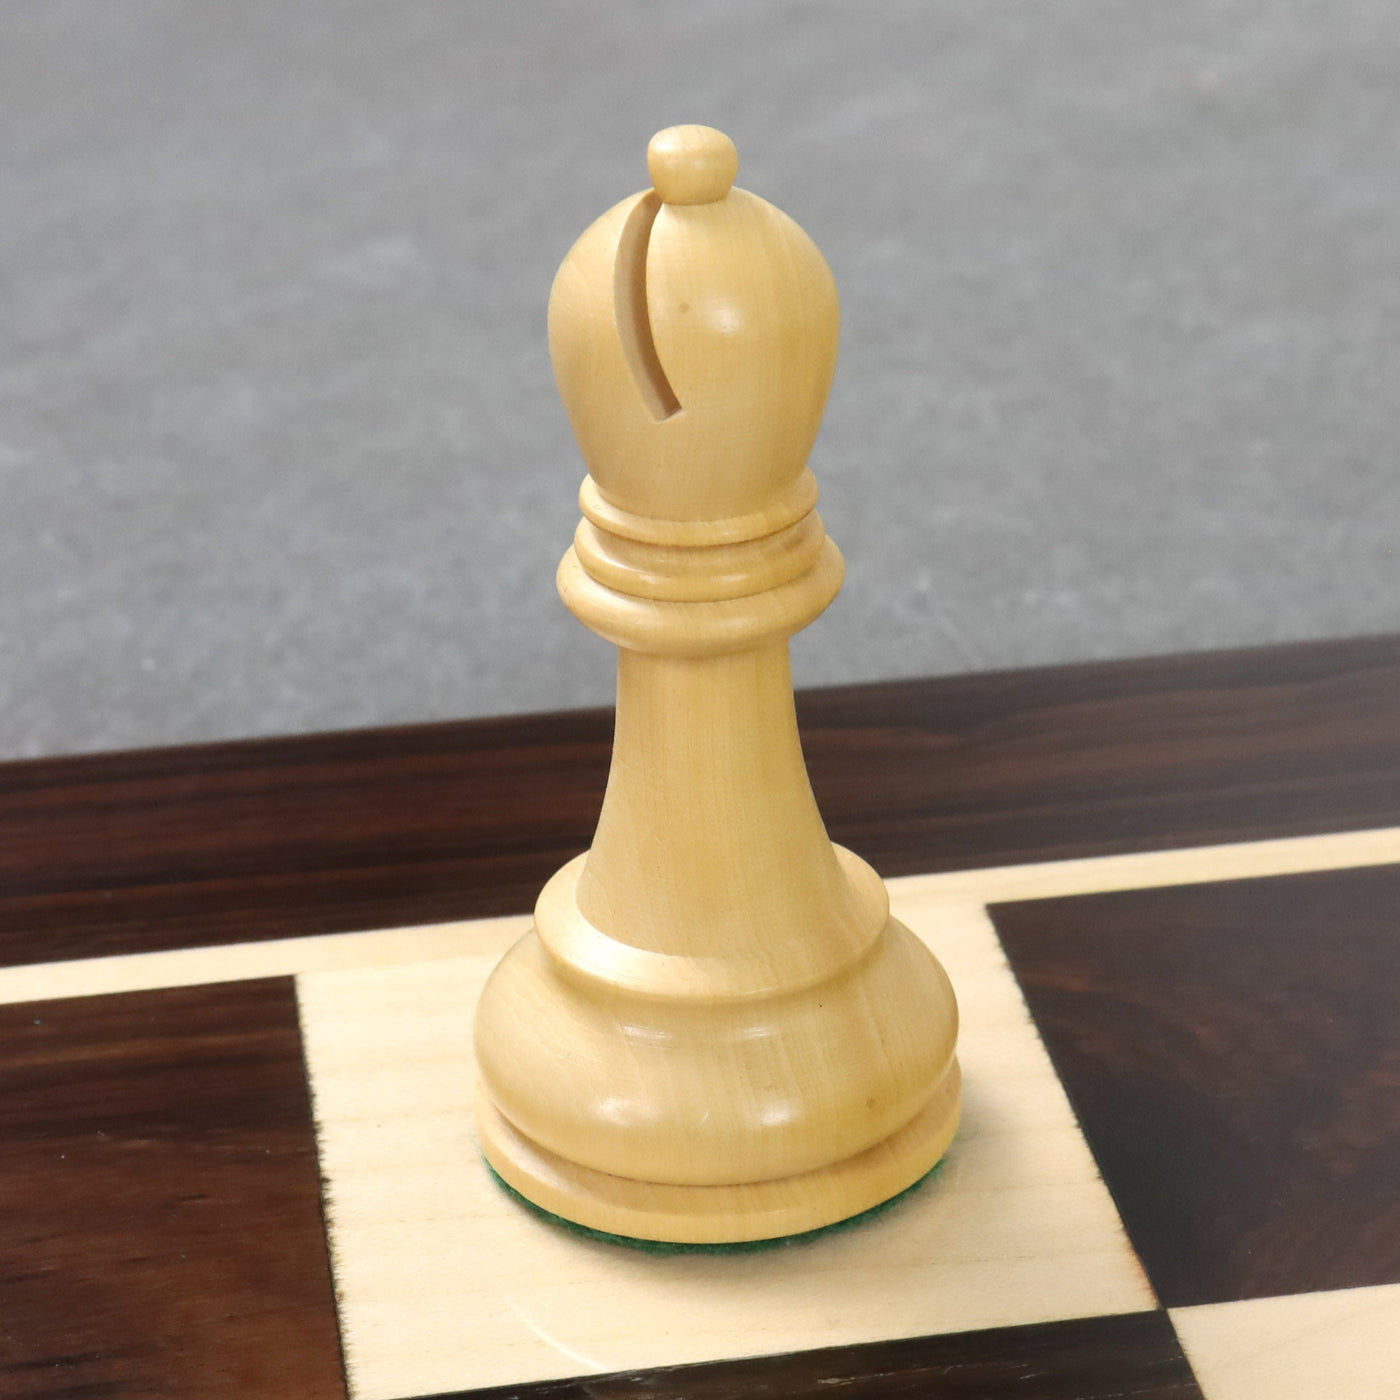 Leningrad Staunton Chess Set - Chess Pieces Only - Rosewood & Boxwood - 4" King